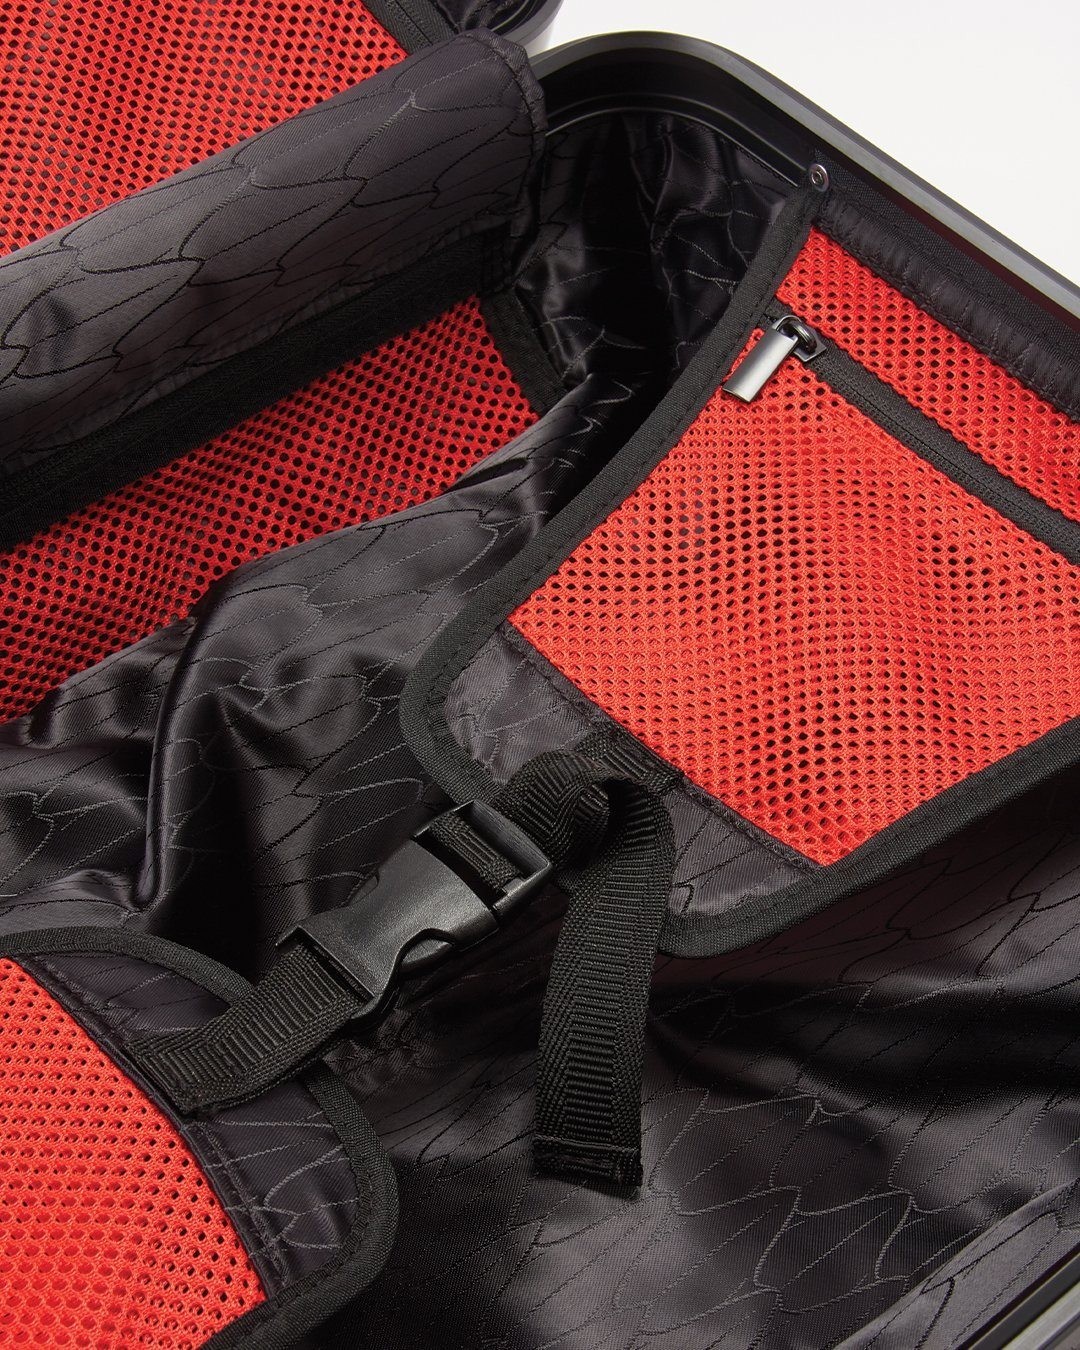 Sale Sprayground Full-Size Black Carry-On Camo Luggage Bundle Discount - -16